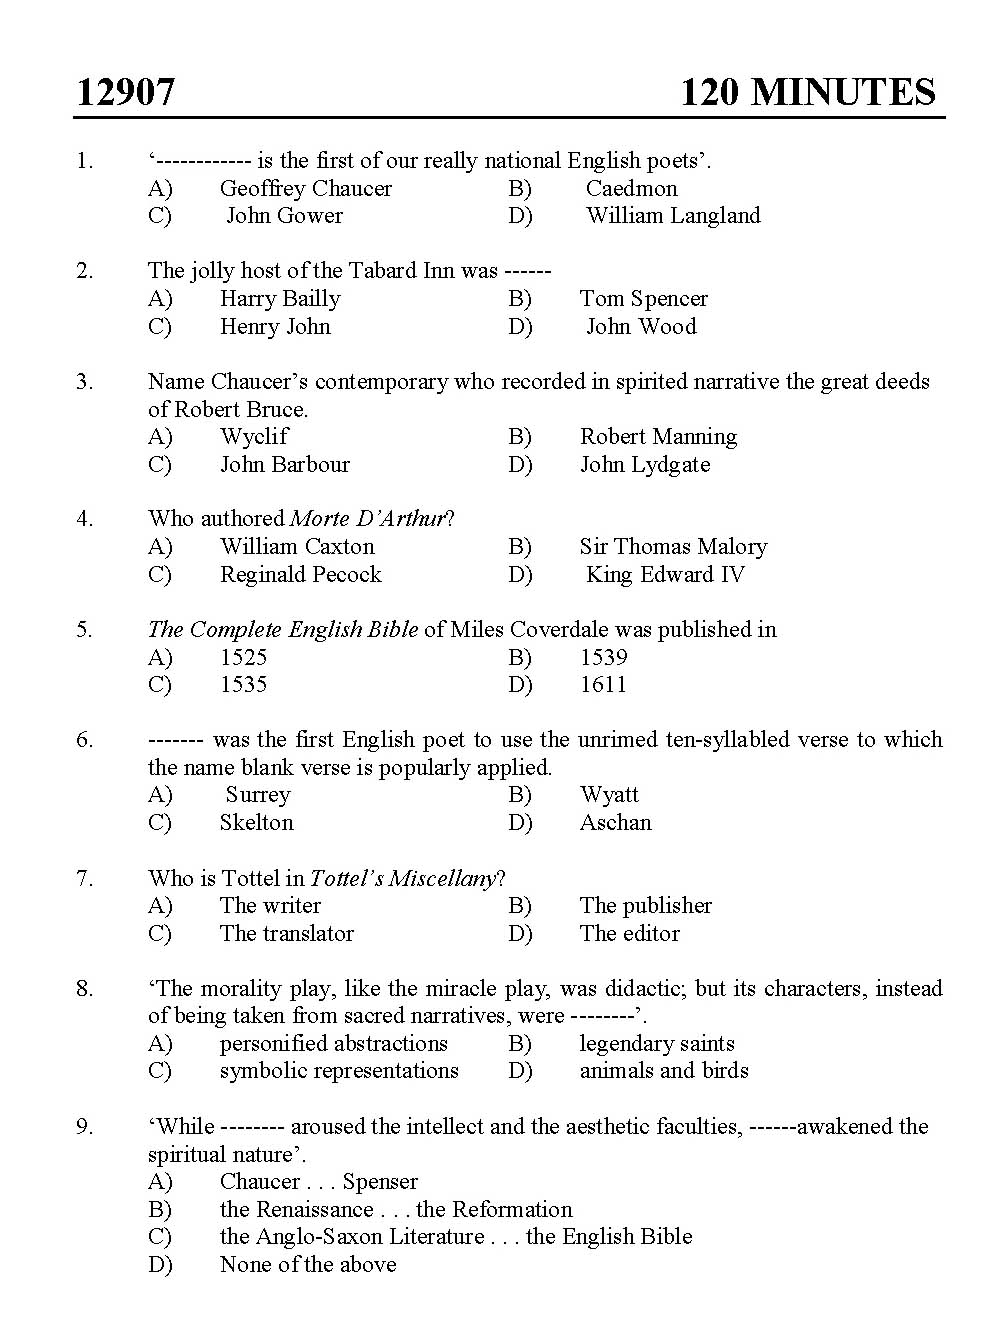 Kerala SET English Exam 2012 Question Code 12907 1